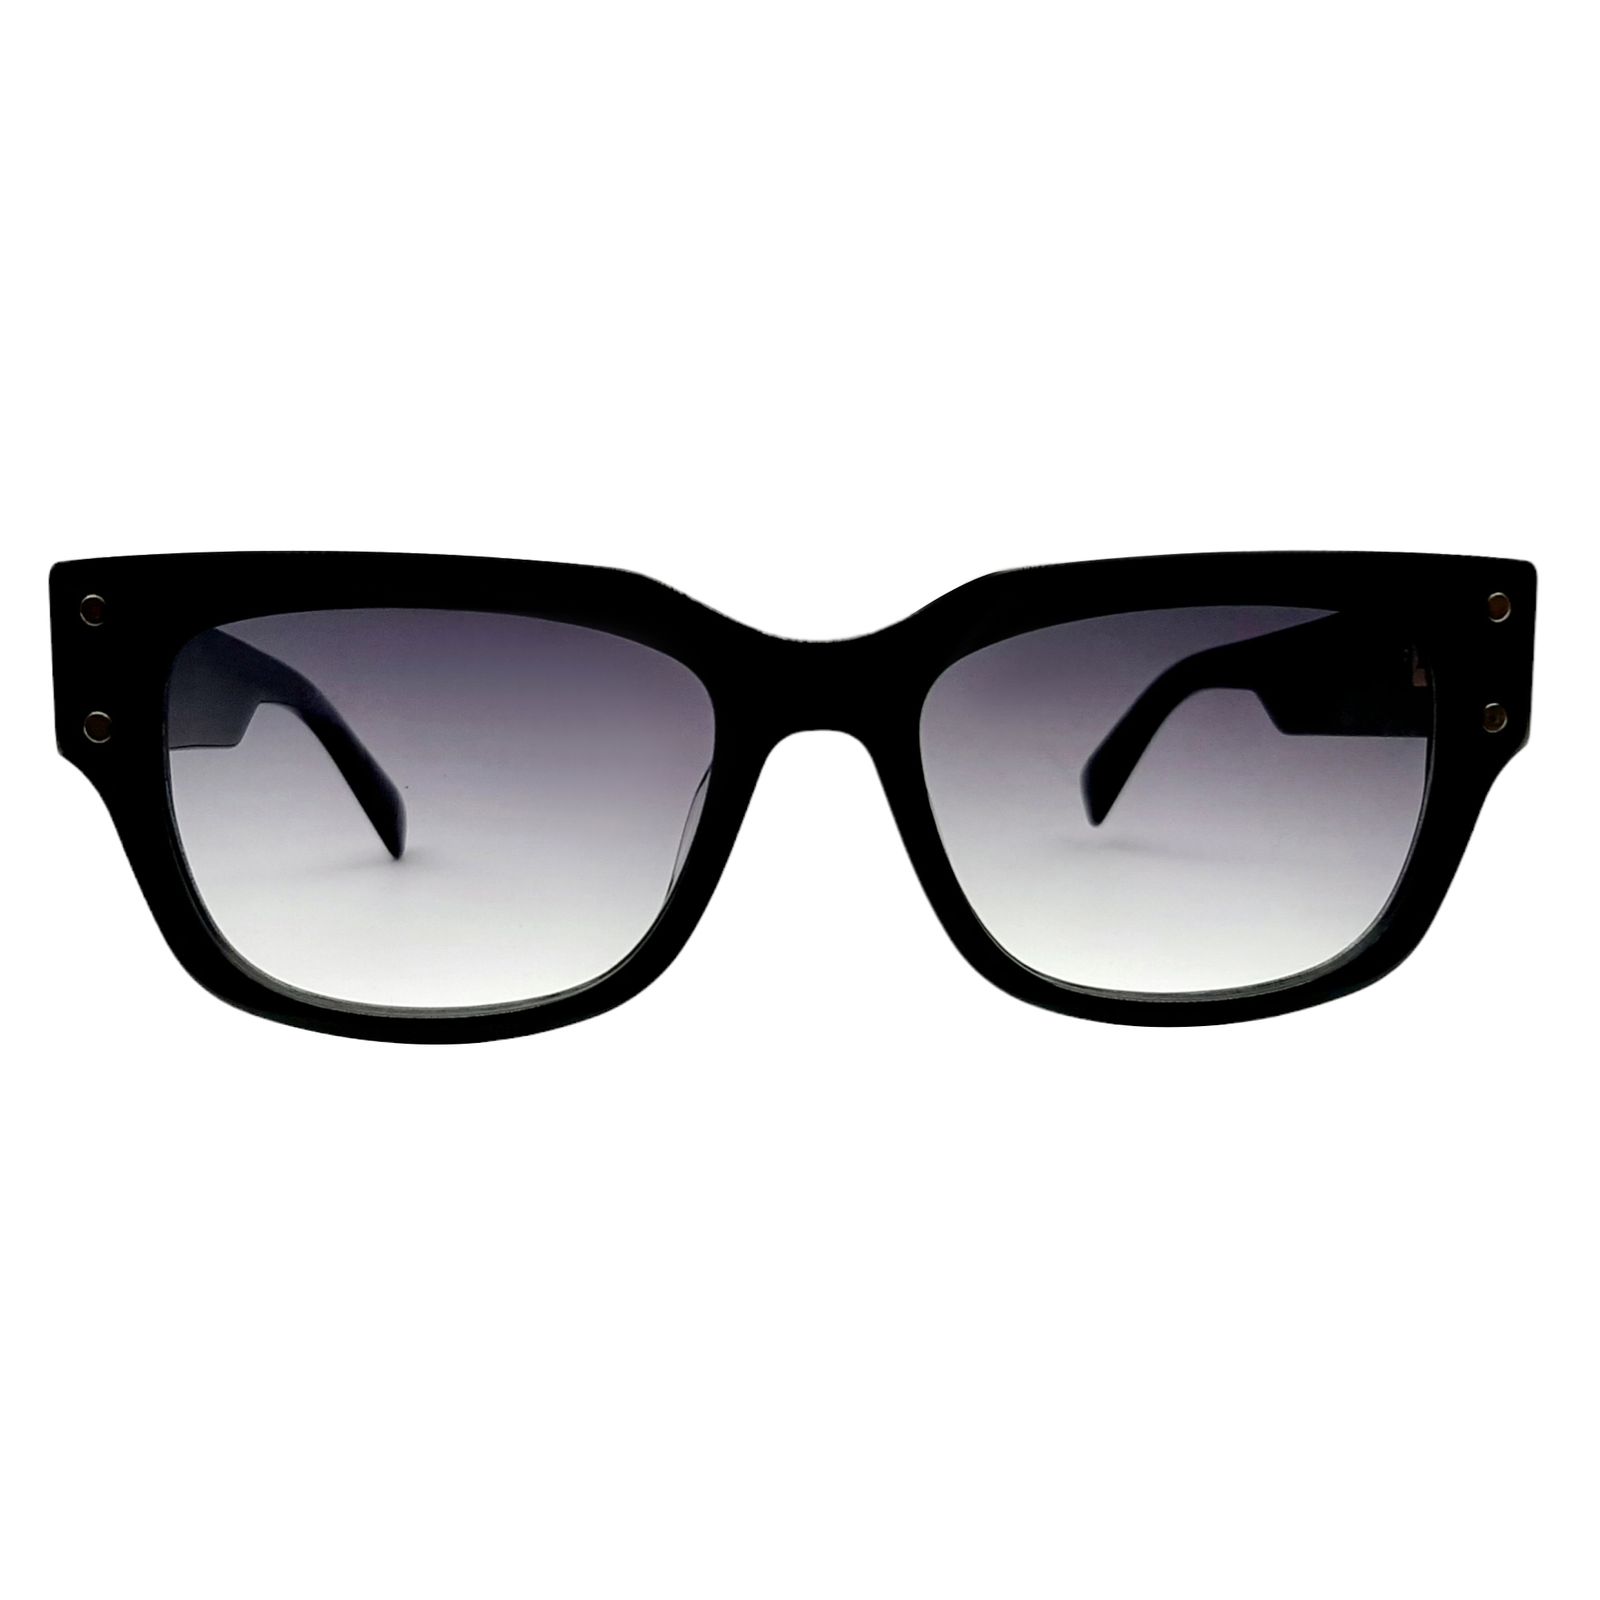 عینک آفتابی بالمن مدل BPS-100A-55blk-gld